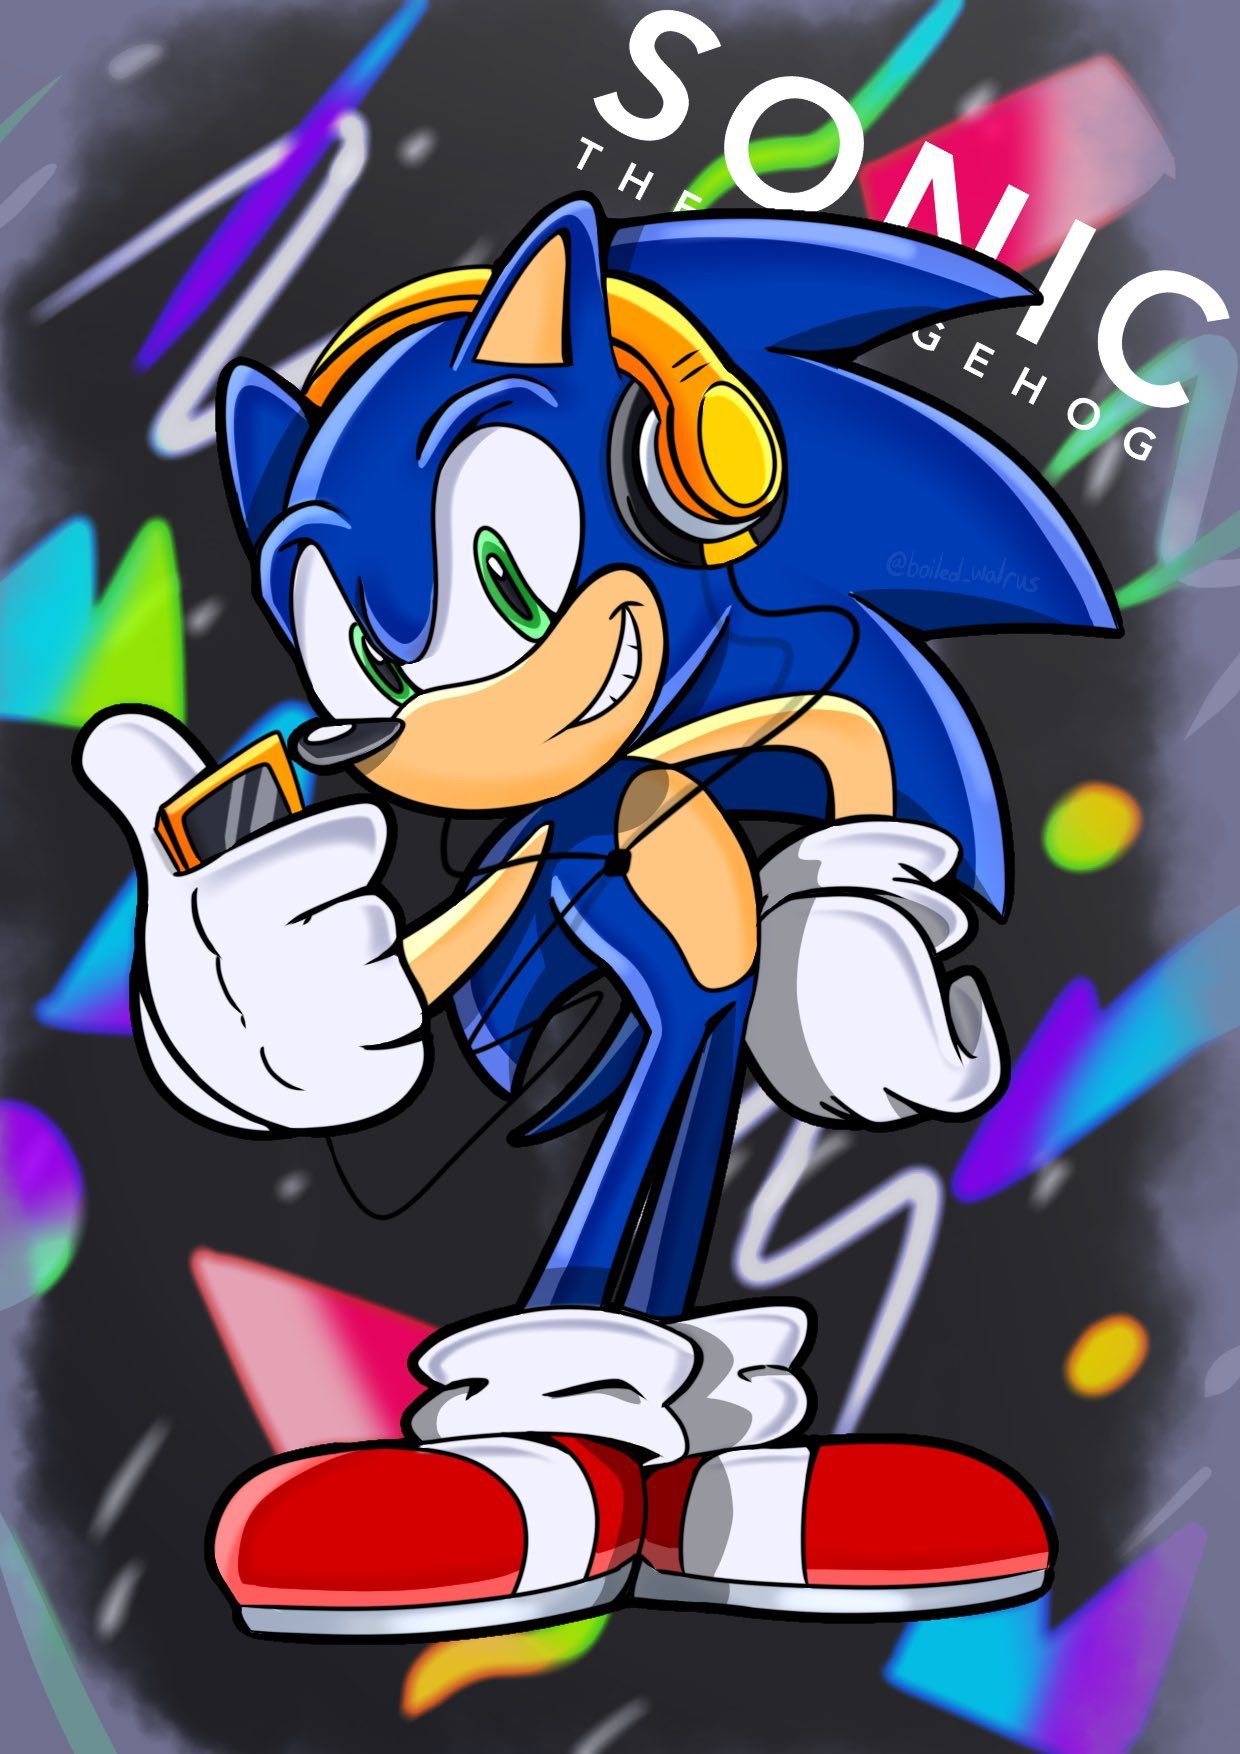 Sonic listening to music on his headphones - Sonic